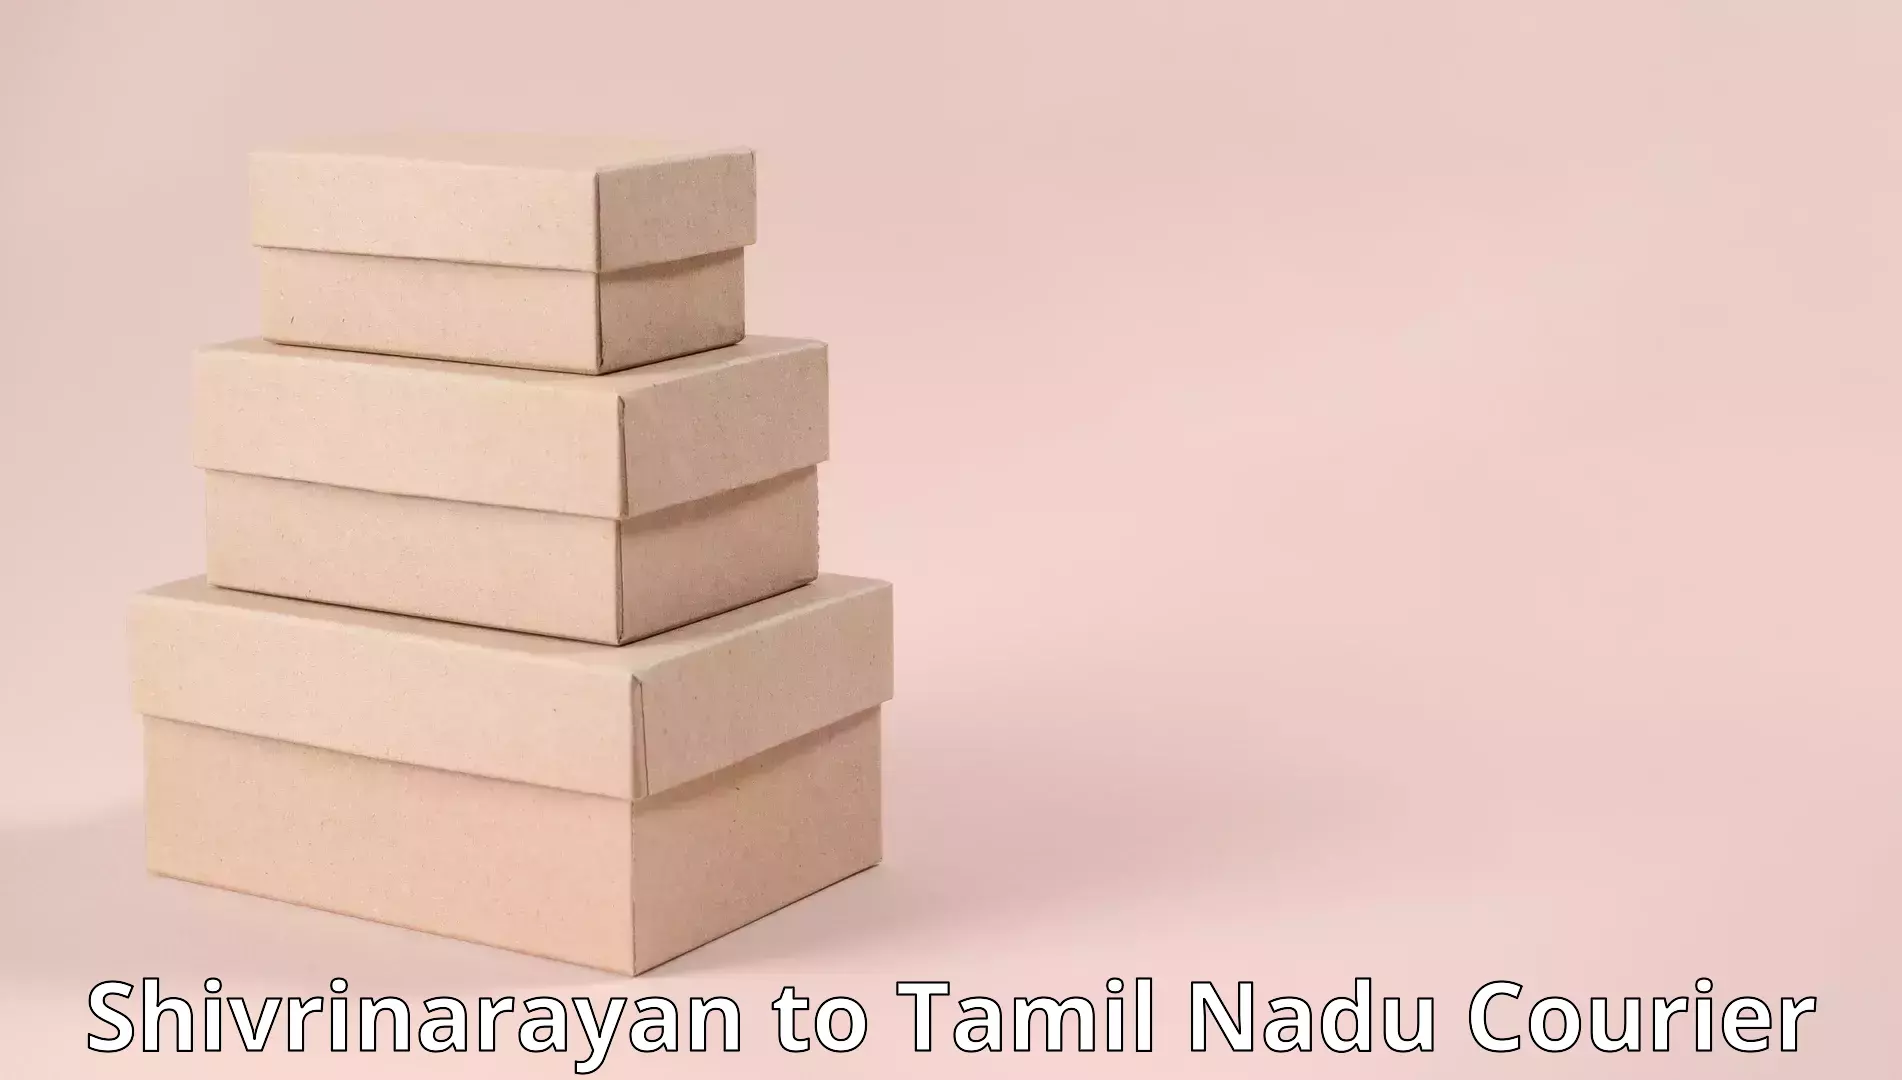 Comprehensive moving assistance Shivrinarayan to Tamil Nadu